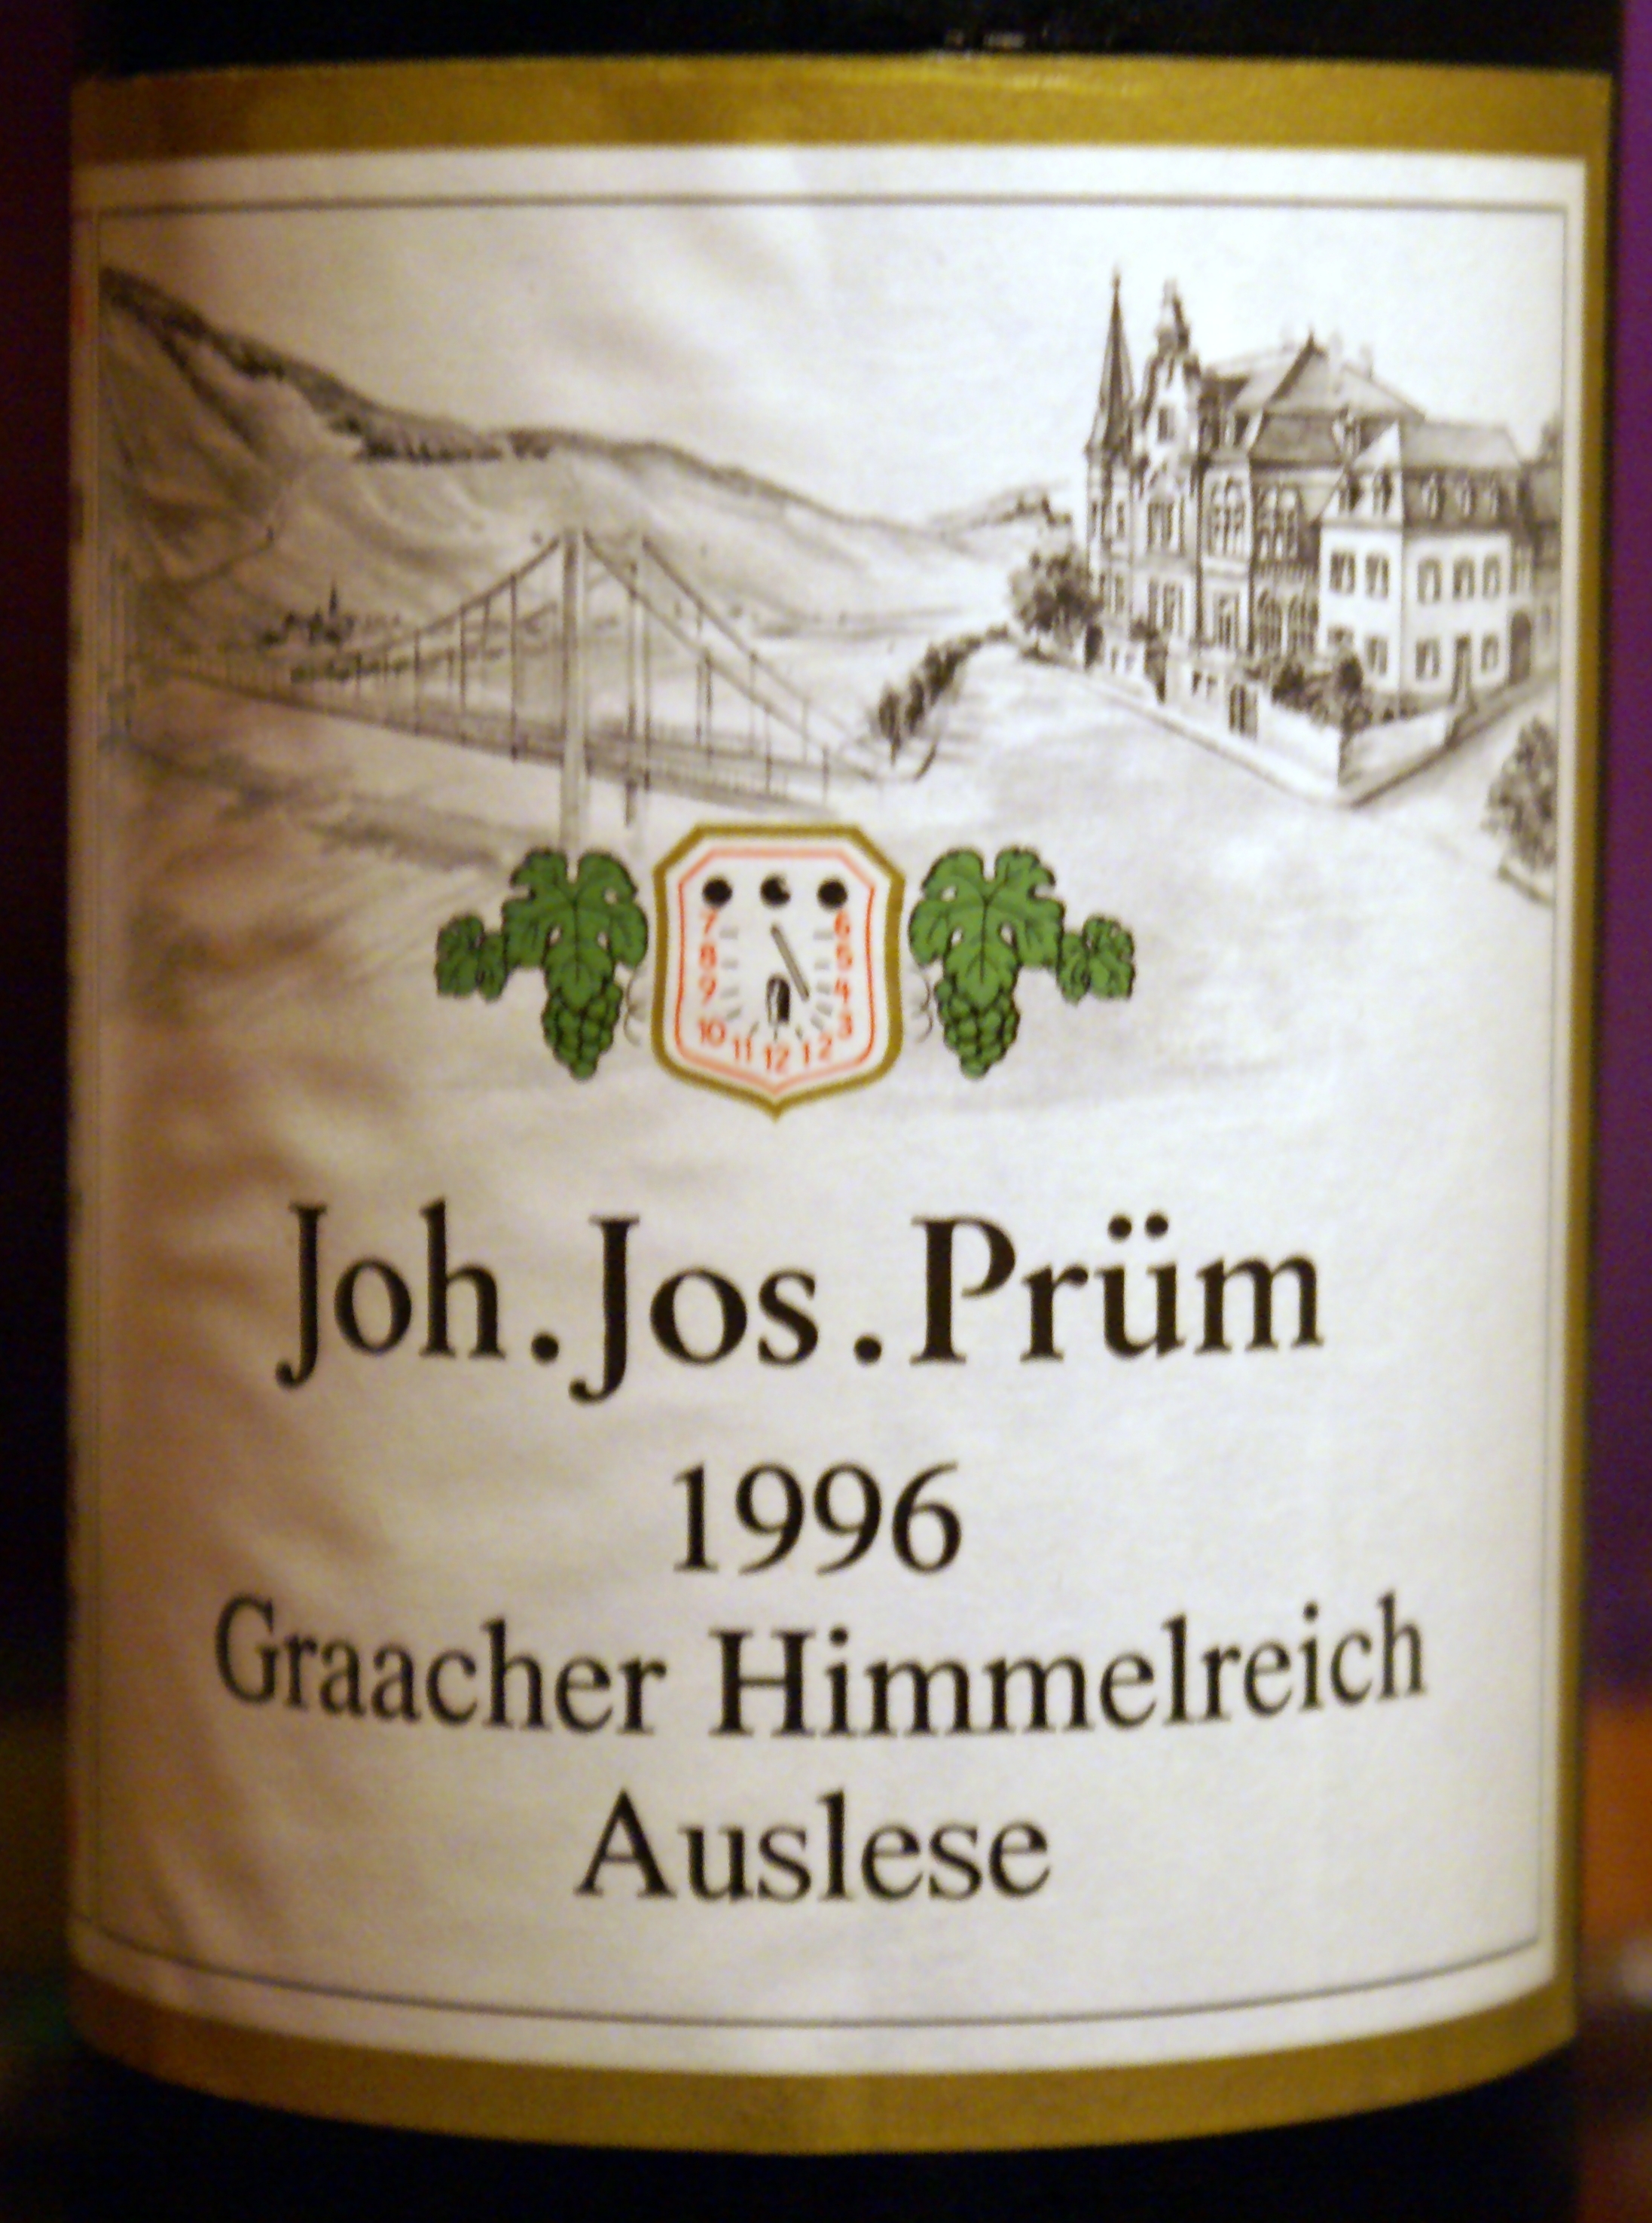 Joh. Jos. Prüm Graacher Himmelreich Riesling 2002